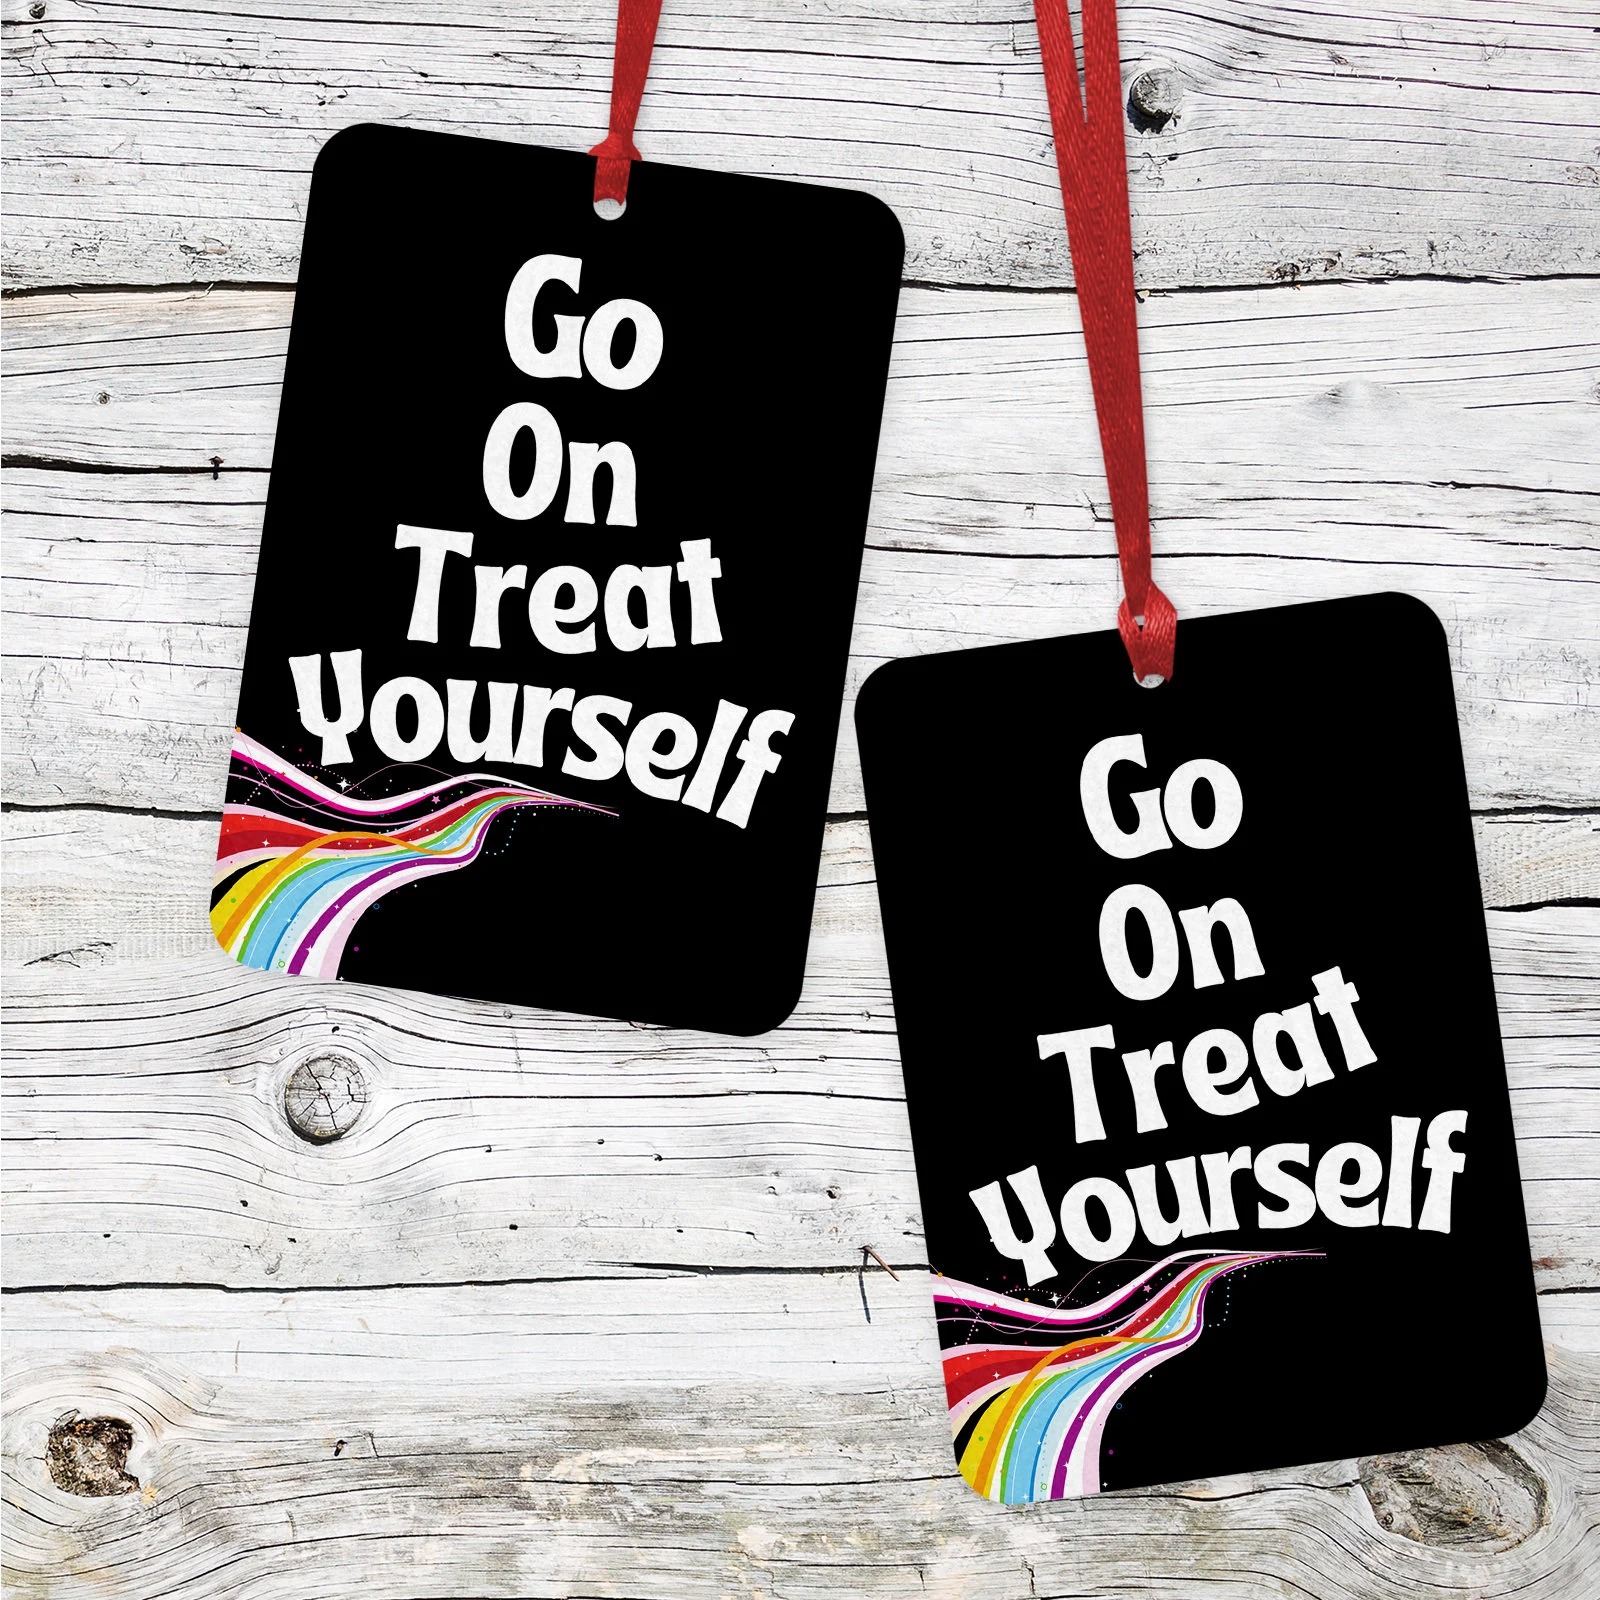 Go on - treat yourself